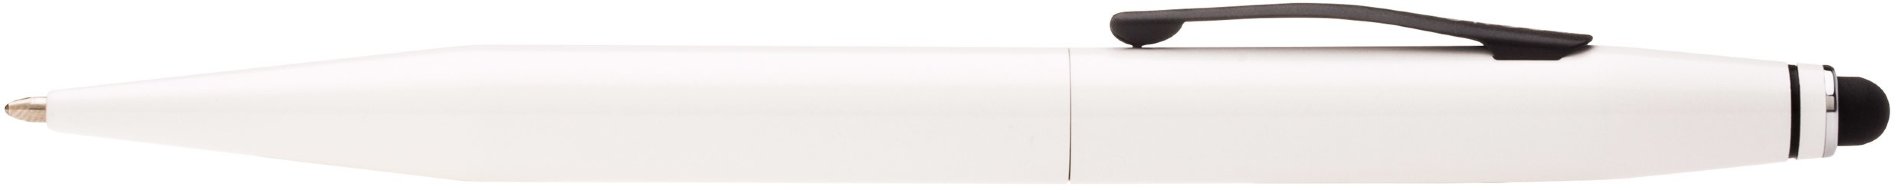 Шариковая ручка со стилусом Cross Tech2, Pearl White